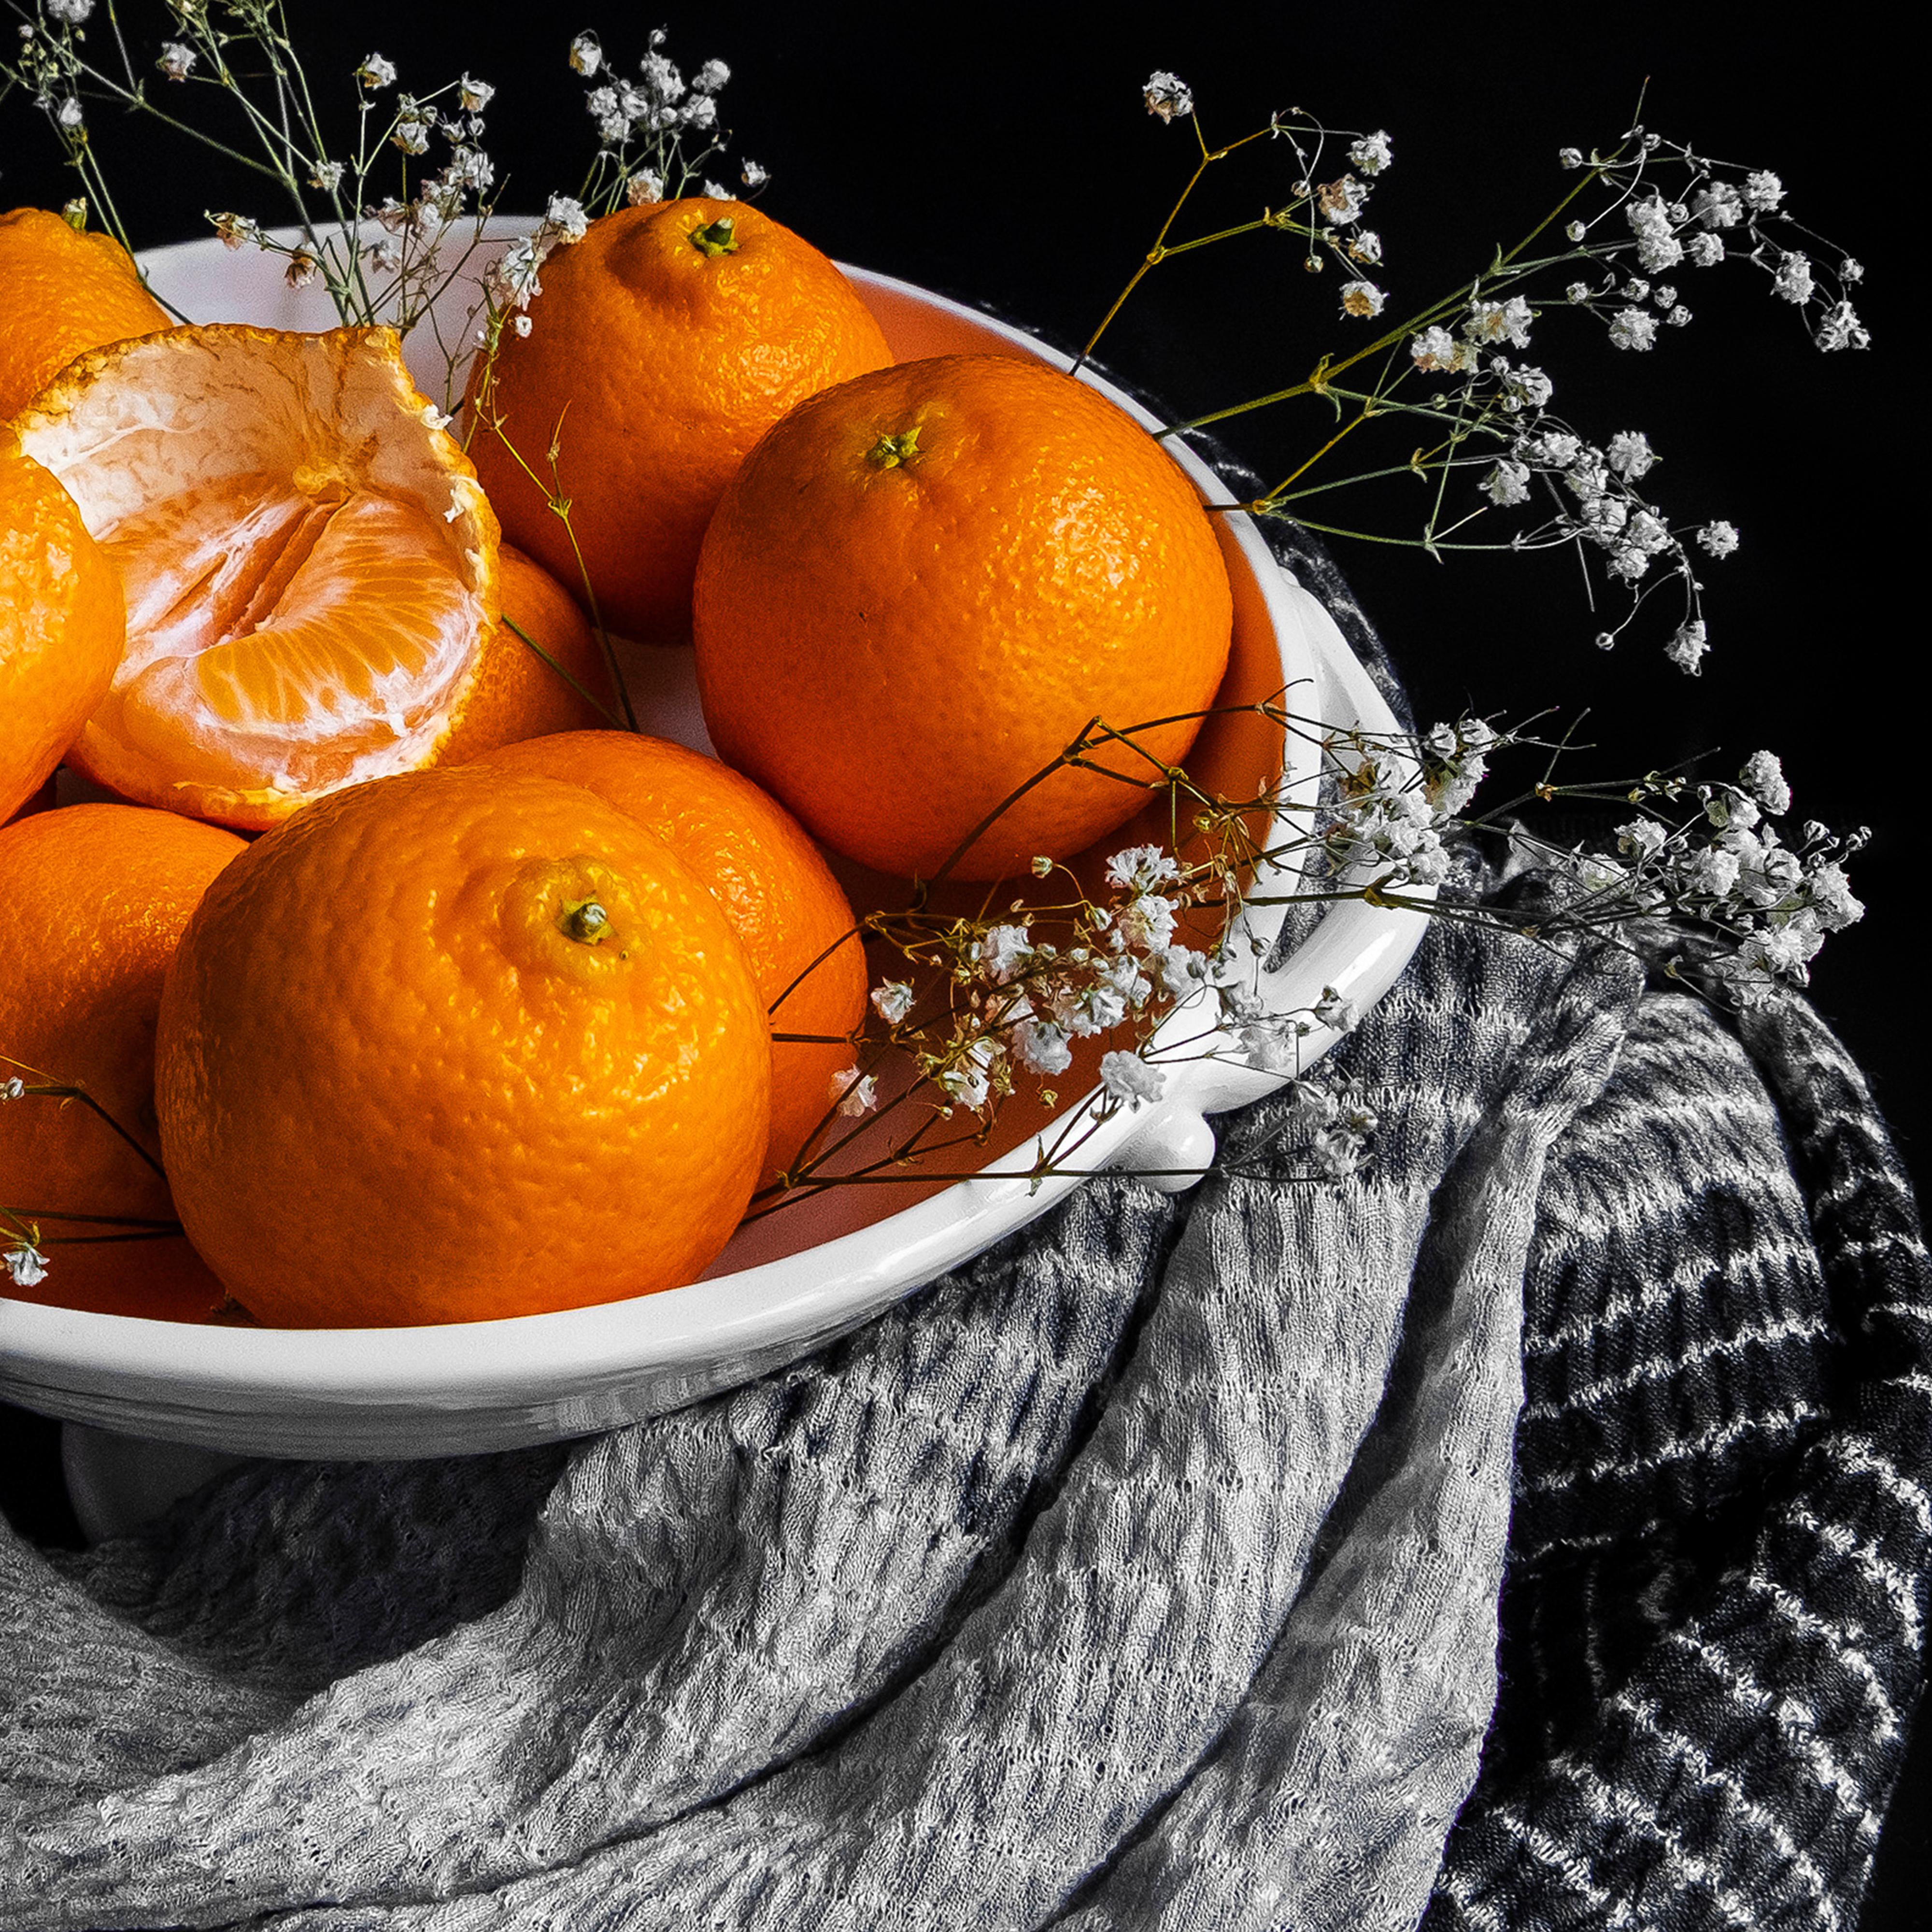 Mandarin Orange Beauty Shot, absurdist still life food photograph, 2020 - Photograph by Sarah Phillips